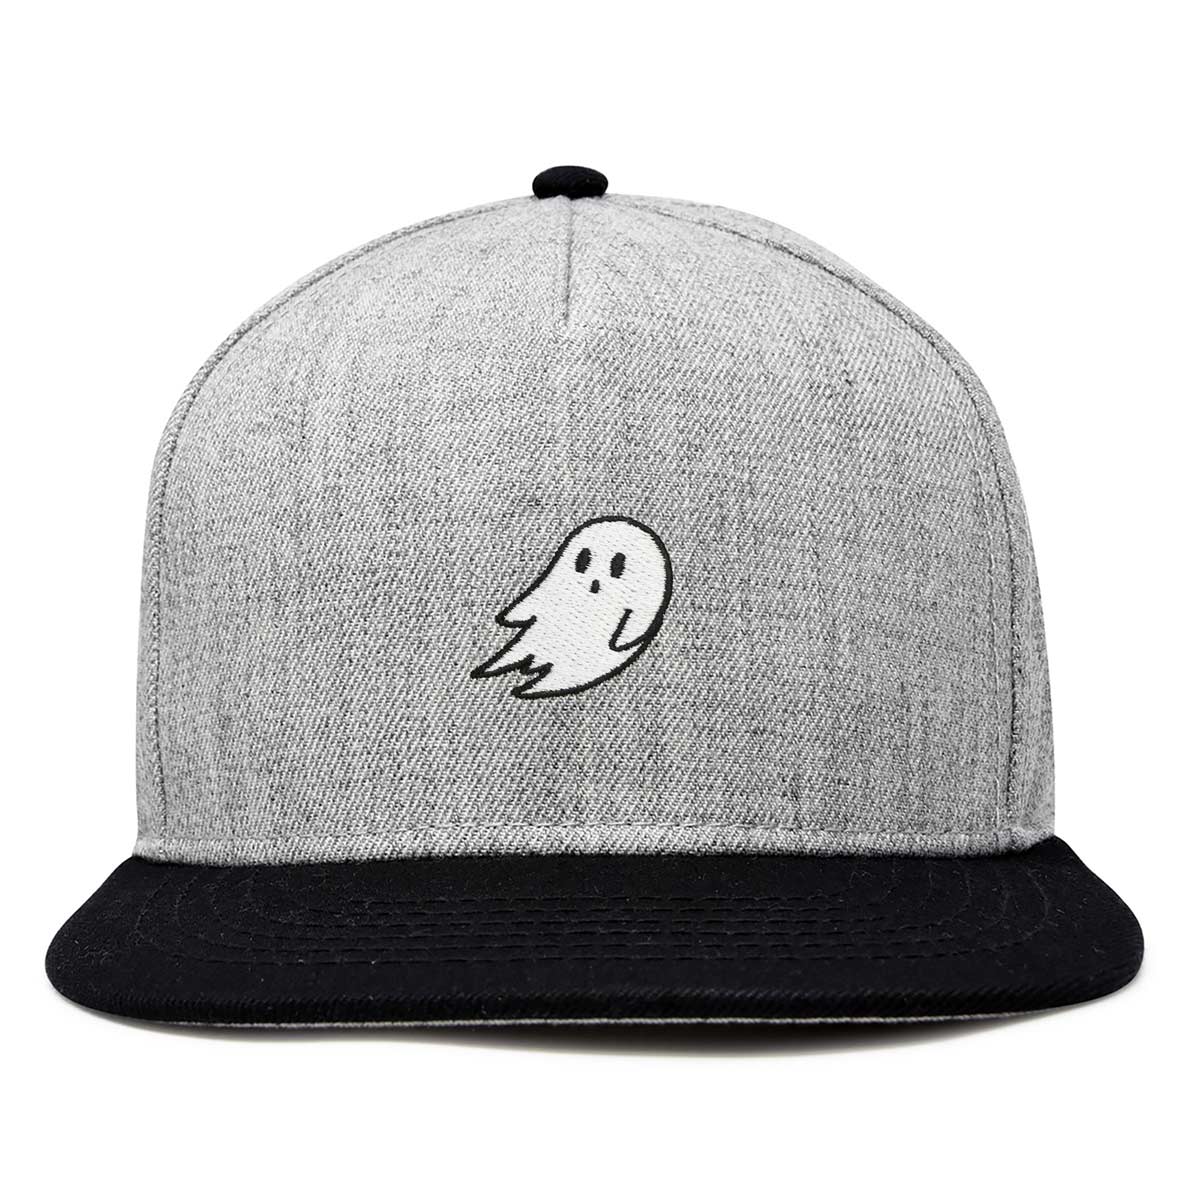 Dalix Ghost Snapback Hat